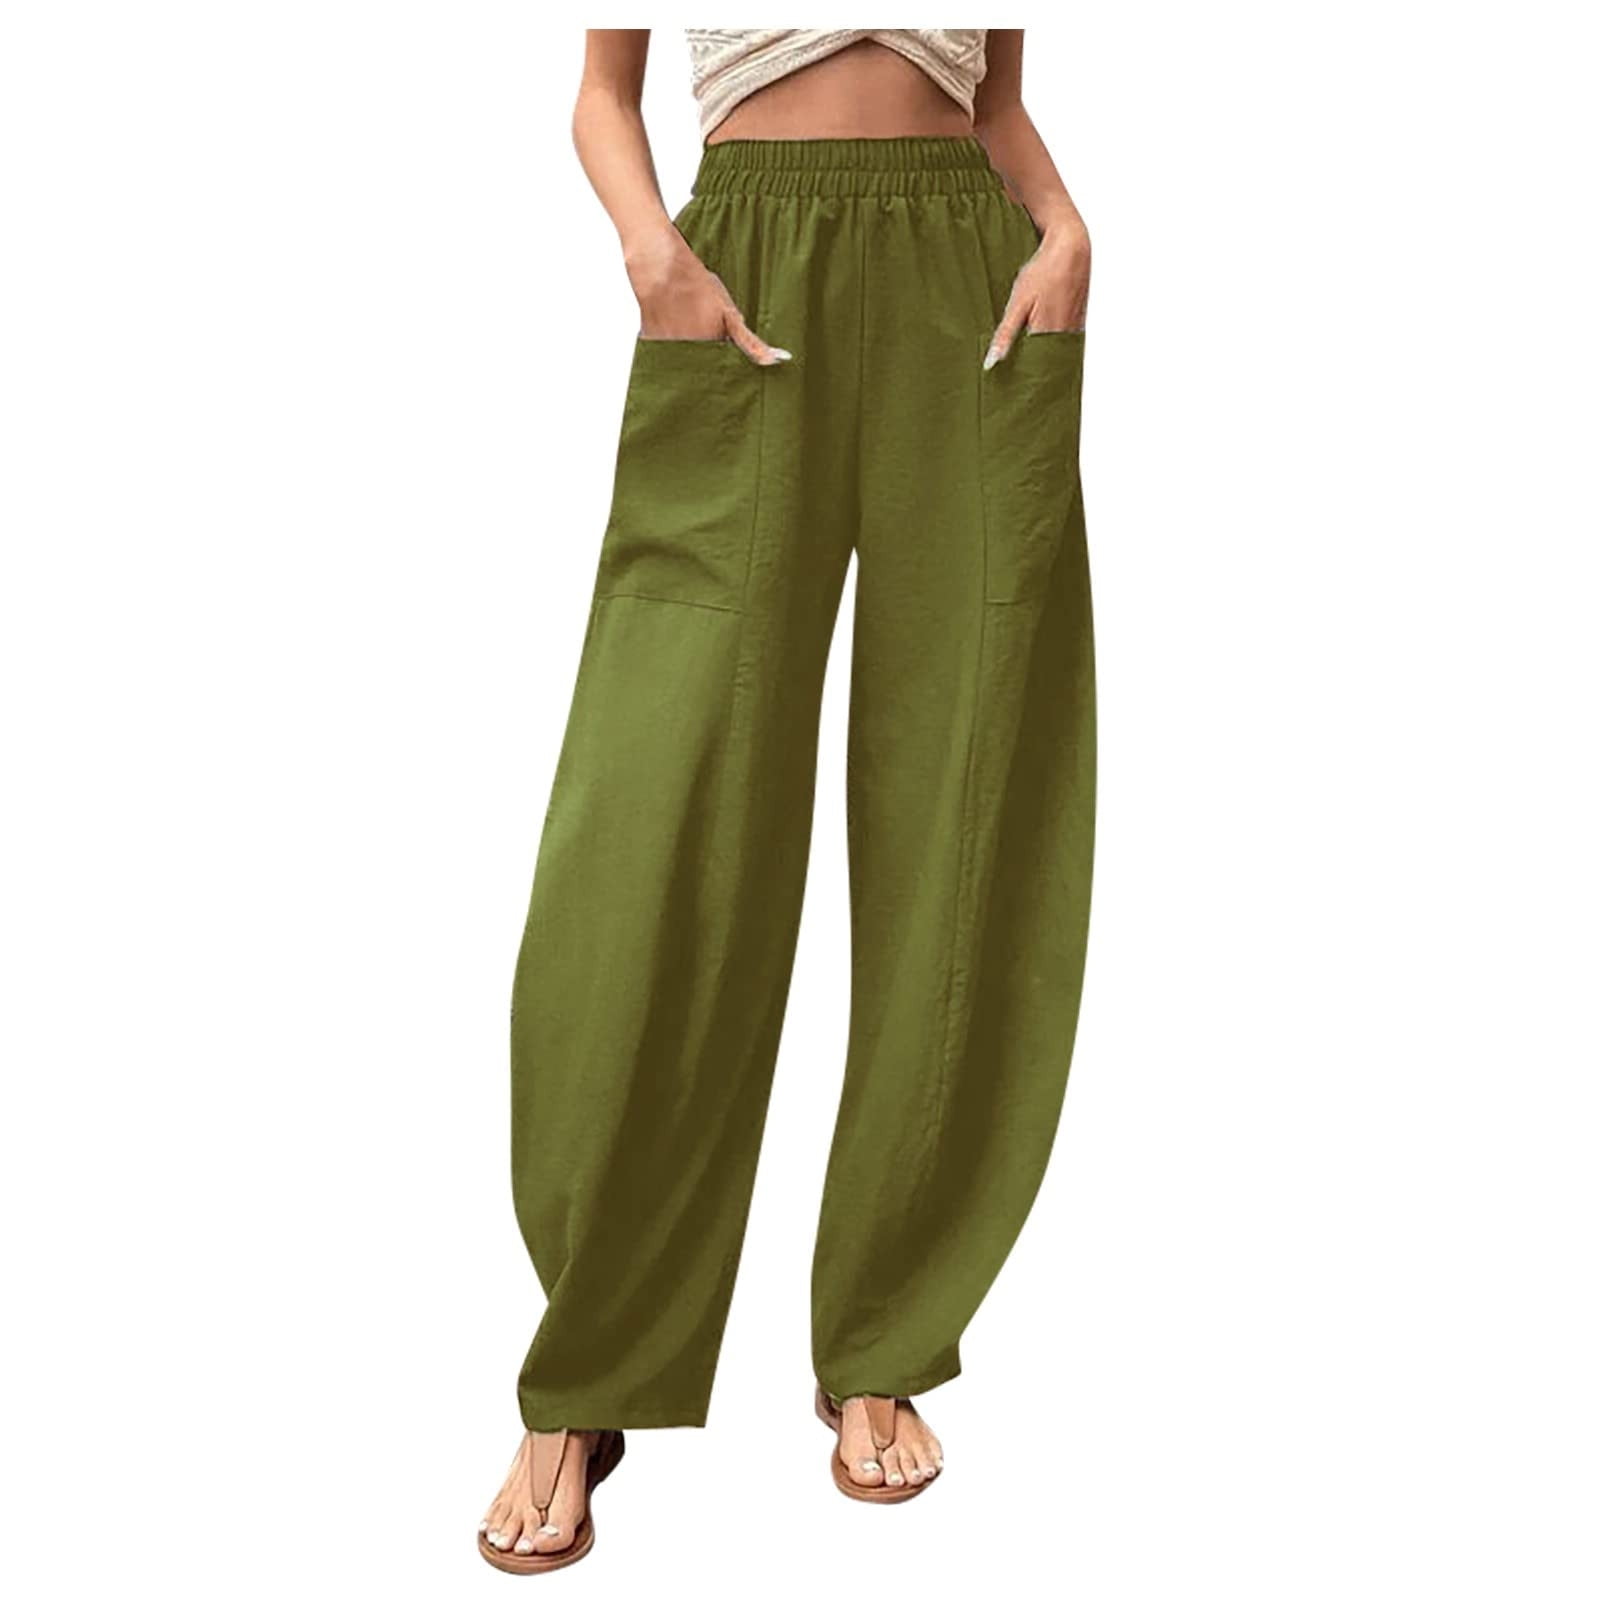 CZHJS Women's Solid Color Pants Clearance Elastic Waist Baggy